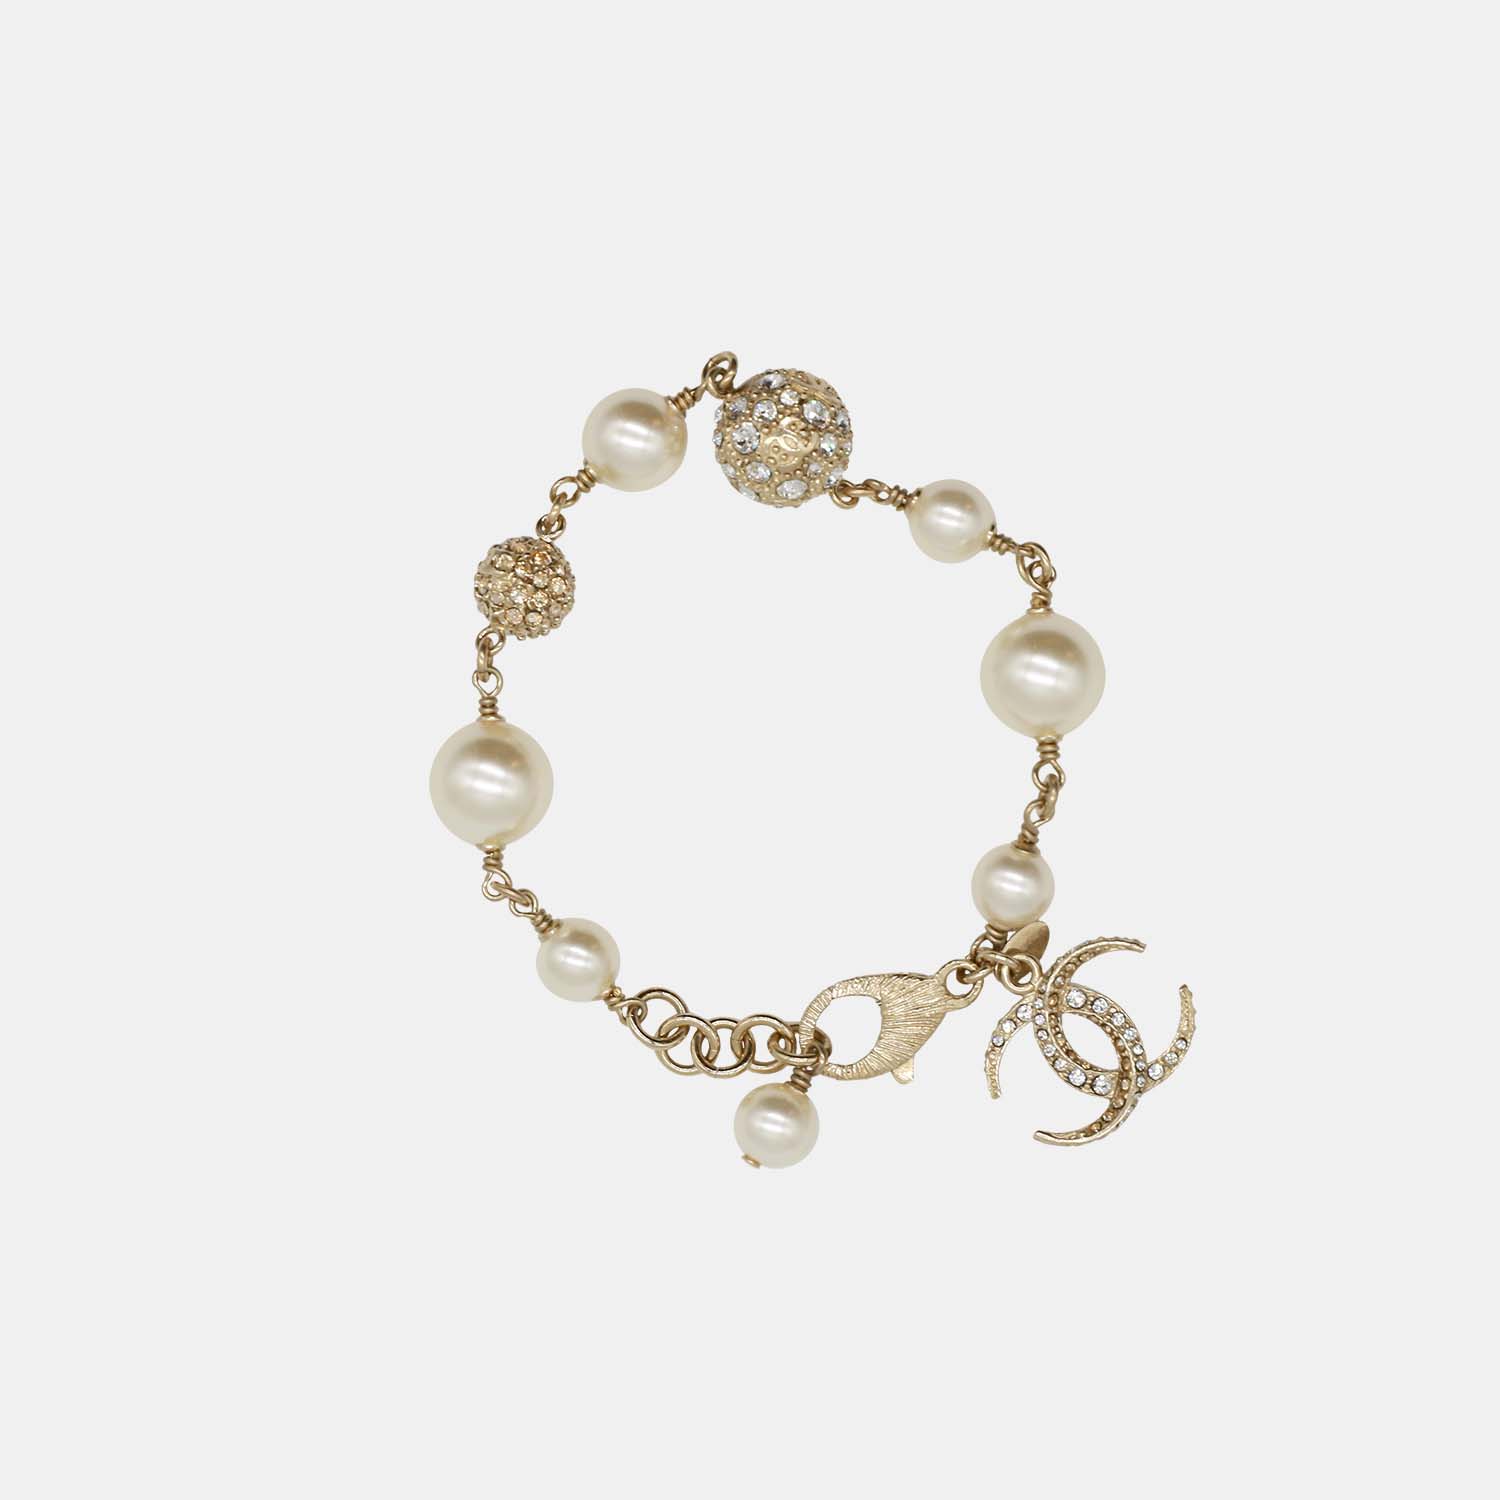 Chanel - Gold Tortoiseshell & Faux Pearl Button 'CC' Earrings